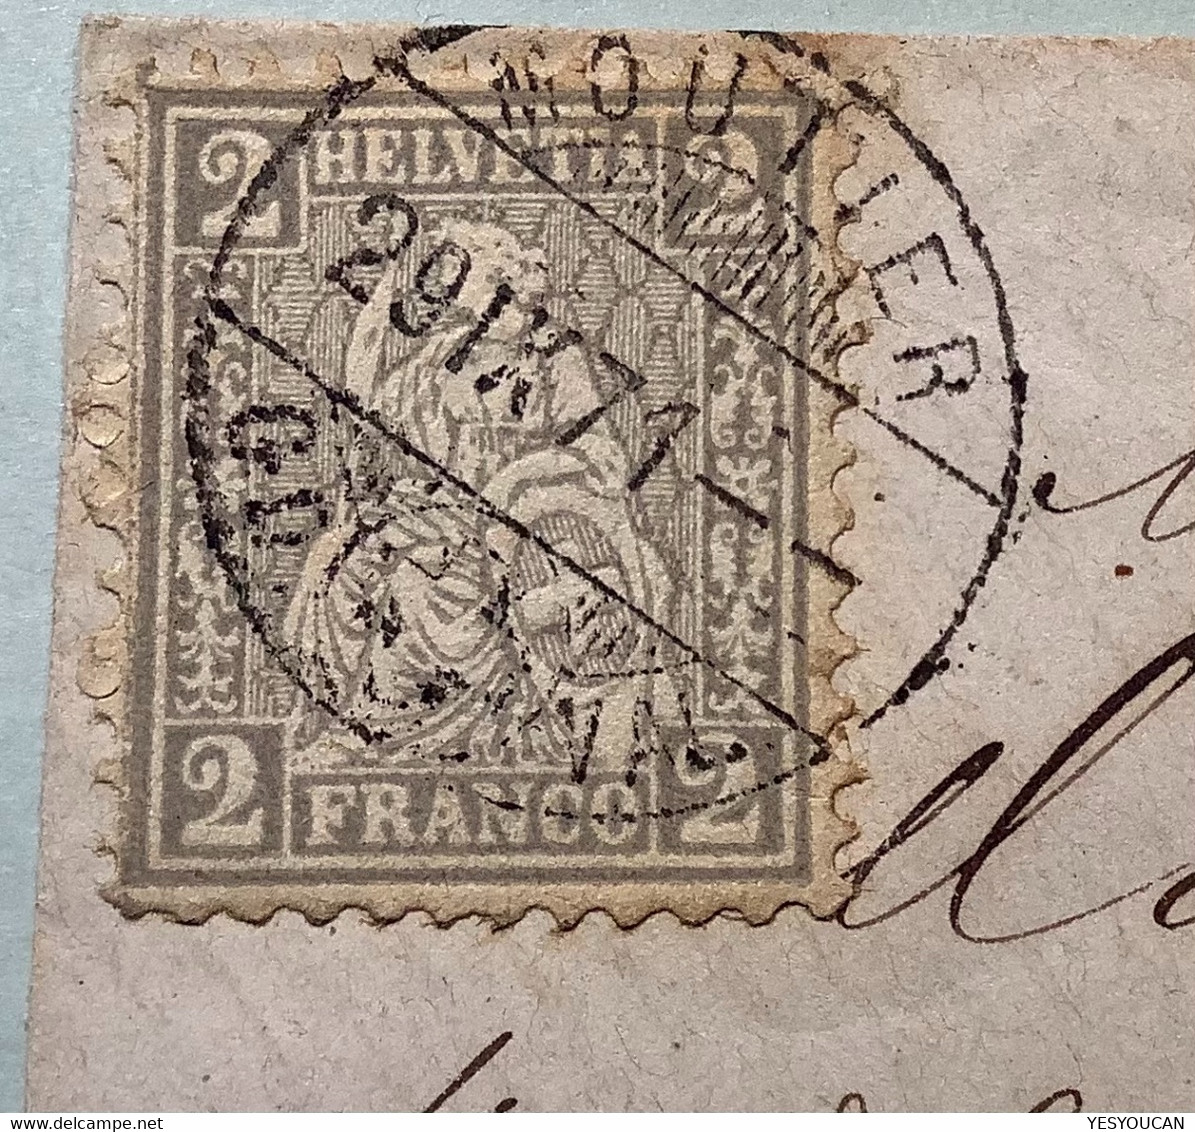 BRIEFLI / LETTRE MINIATURE: ZNr 28 MOUTIER 1871 Luxus Brief (Schweiz 1862 Sitzende Helvetia Mini Cover Enveloppe BE - Covers & Documents